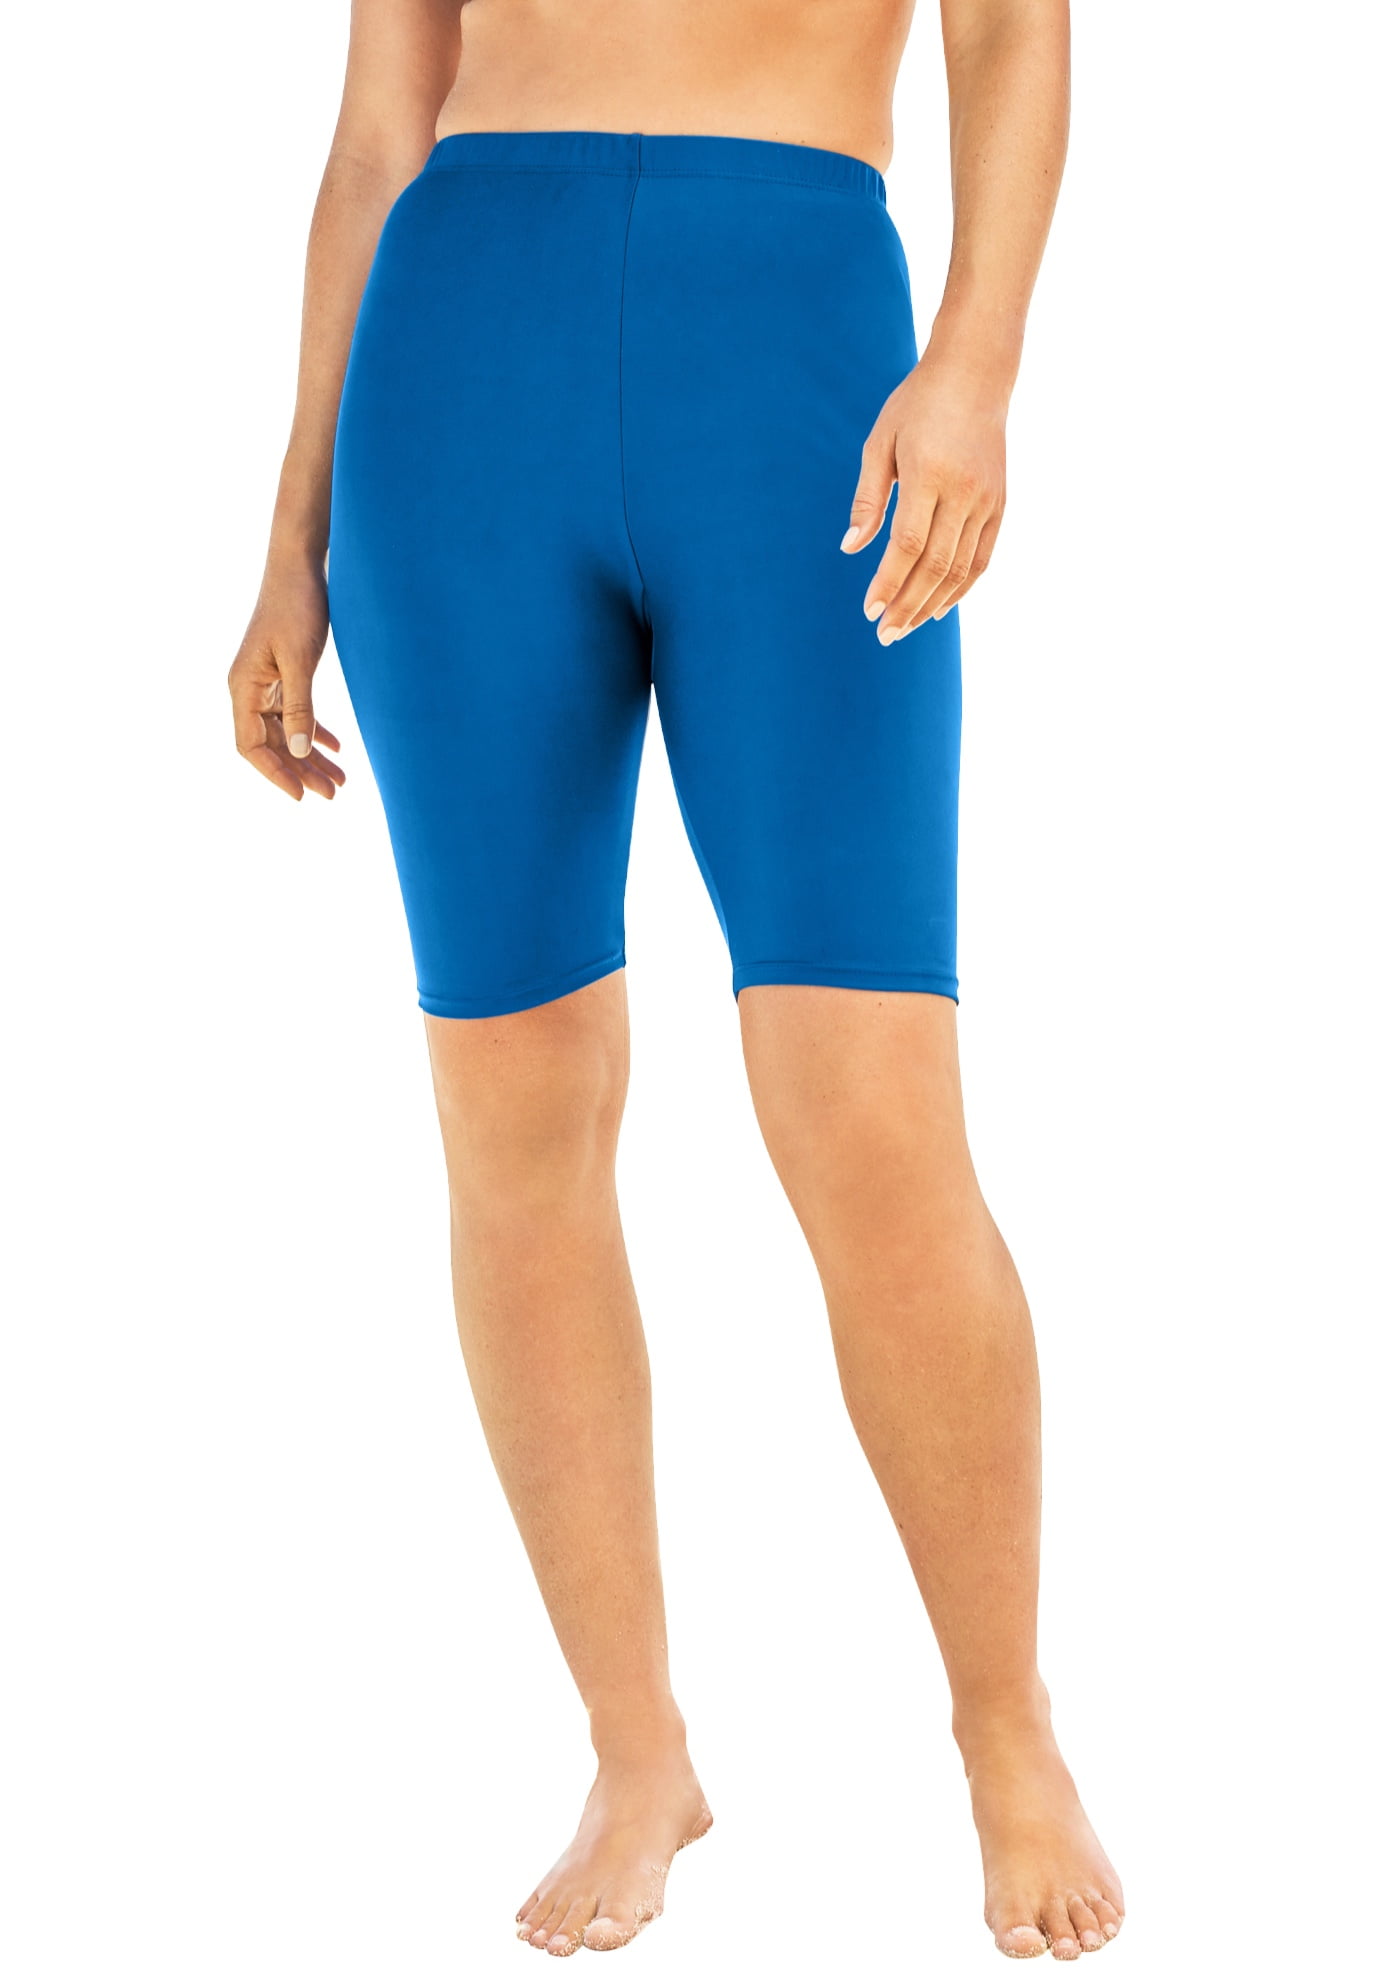 Swimsuits For All Women's Plus Size Swim Bike Short 20 Dream Blue